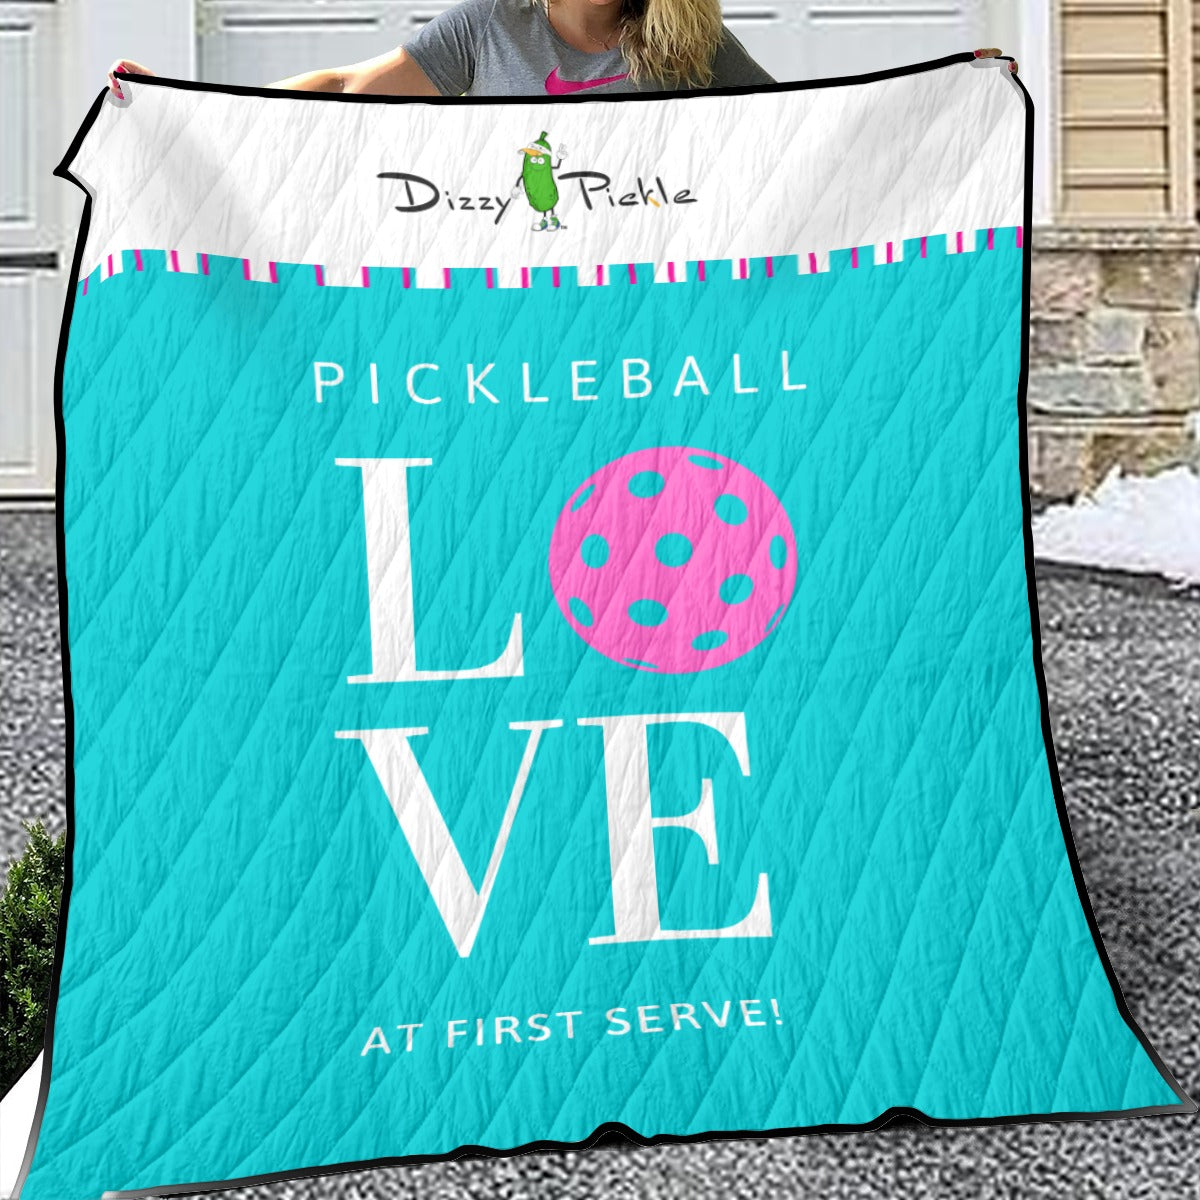 Pickleball Love at First Serve - Teak/Pink - Lightweight Quilt by Dizzy Pickle